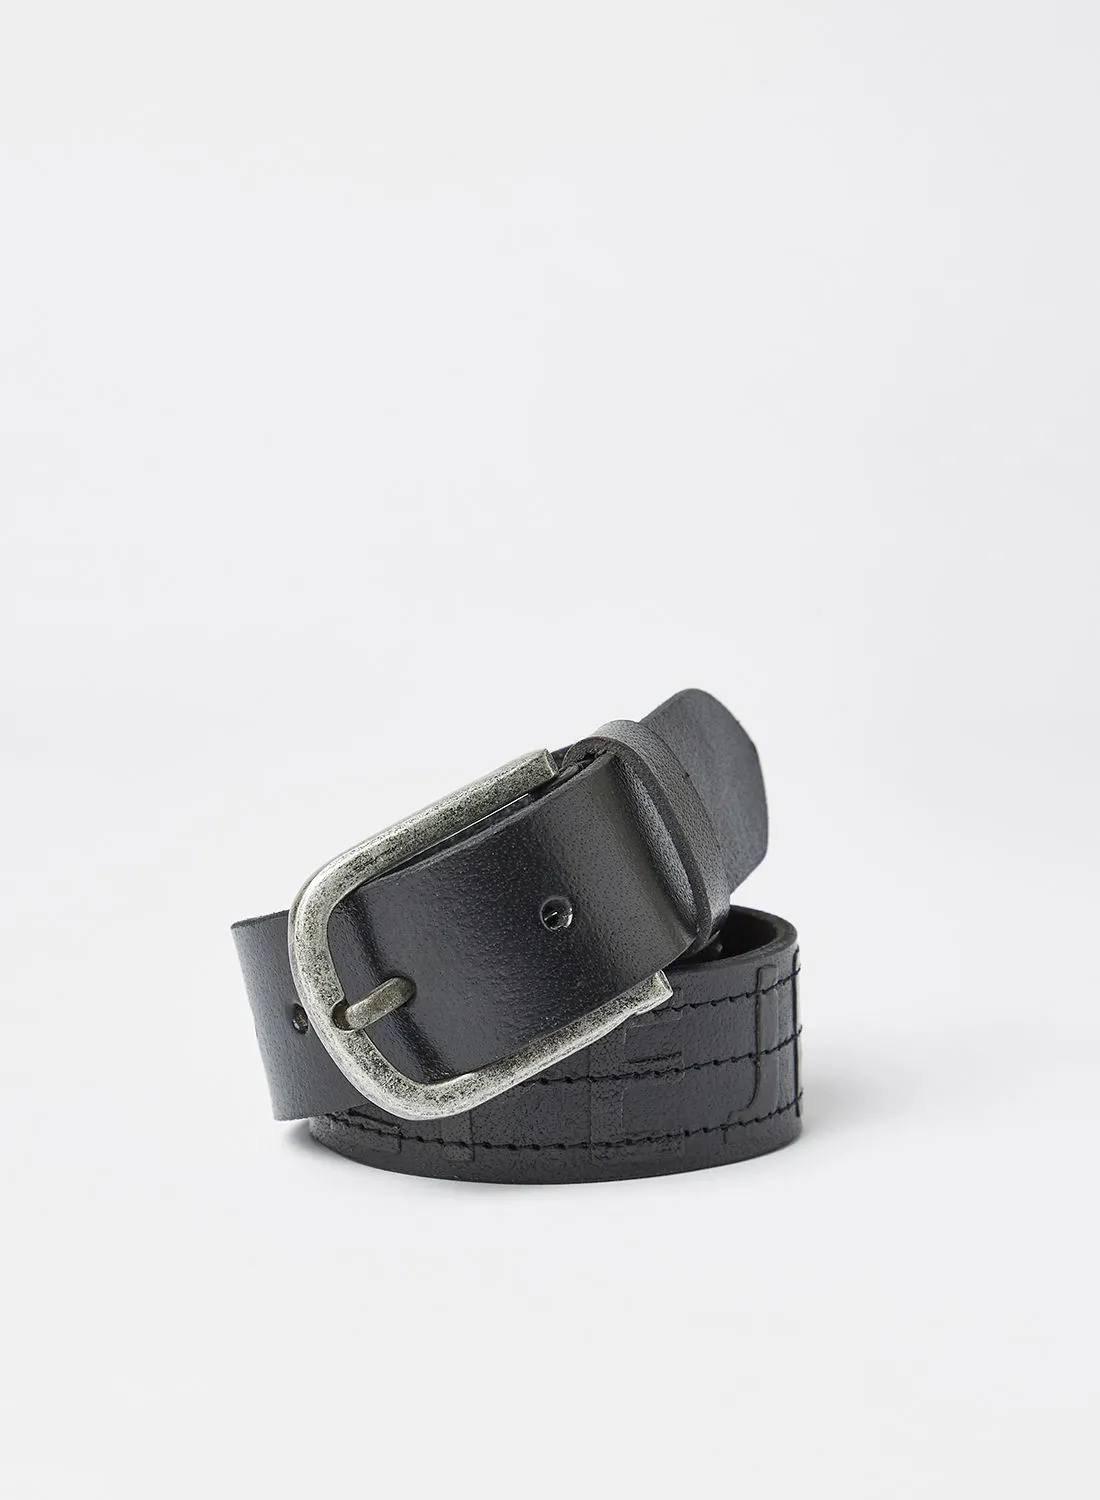 Pepe Jeans LONDON Embossed Leather Belt Black